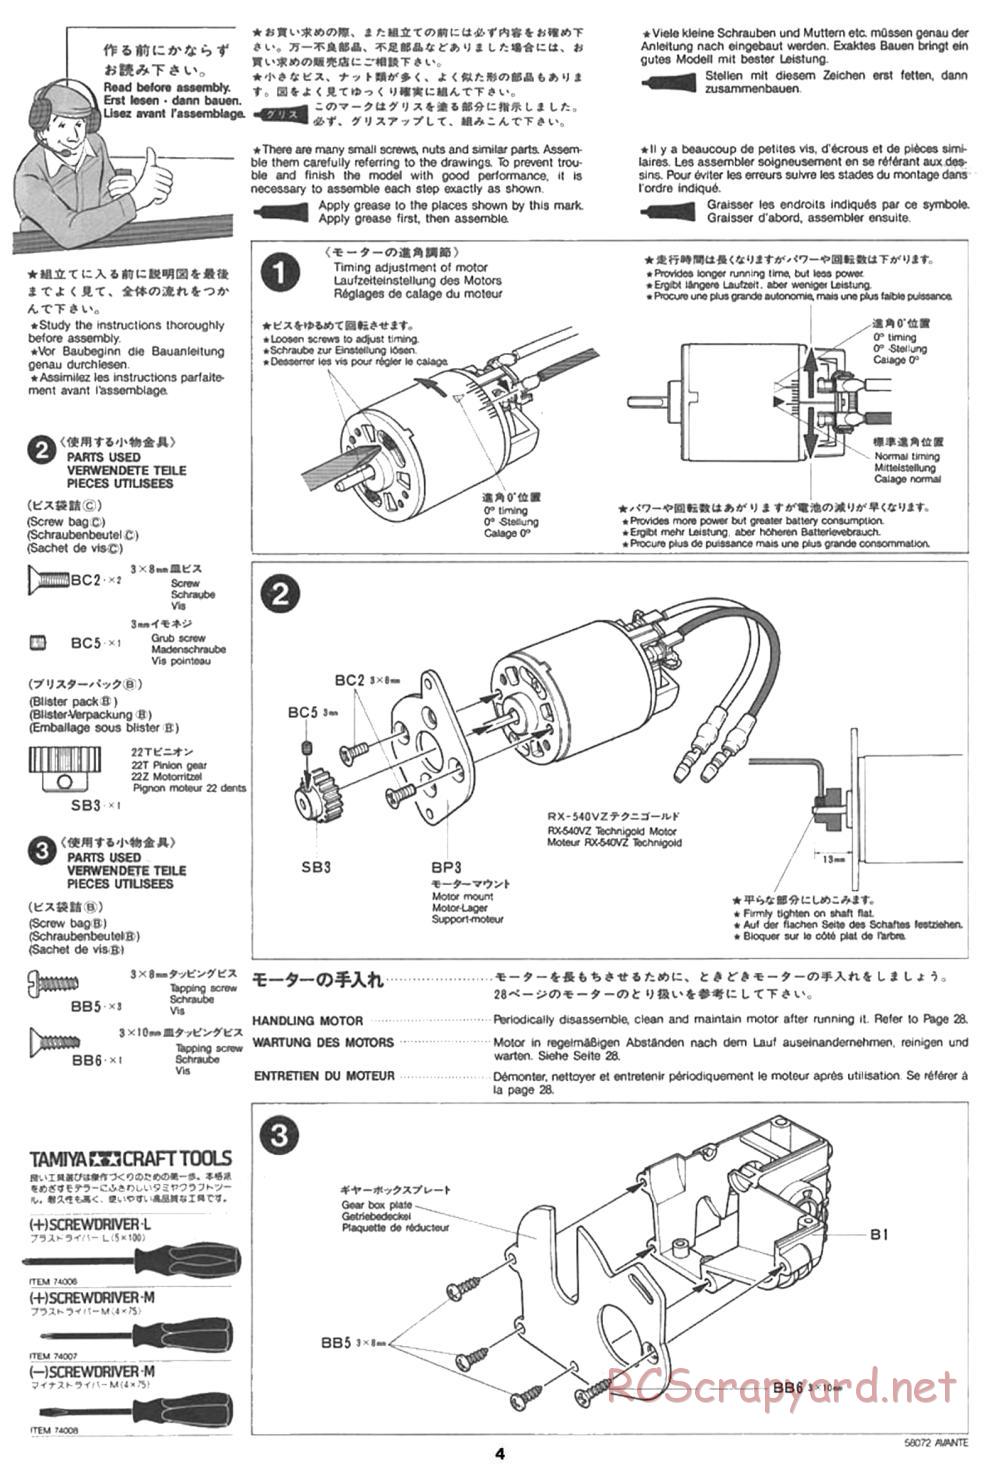 Tamiya - Avante - 58072 - Manual - Page 4